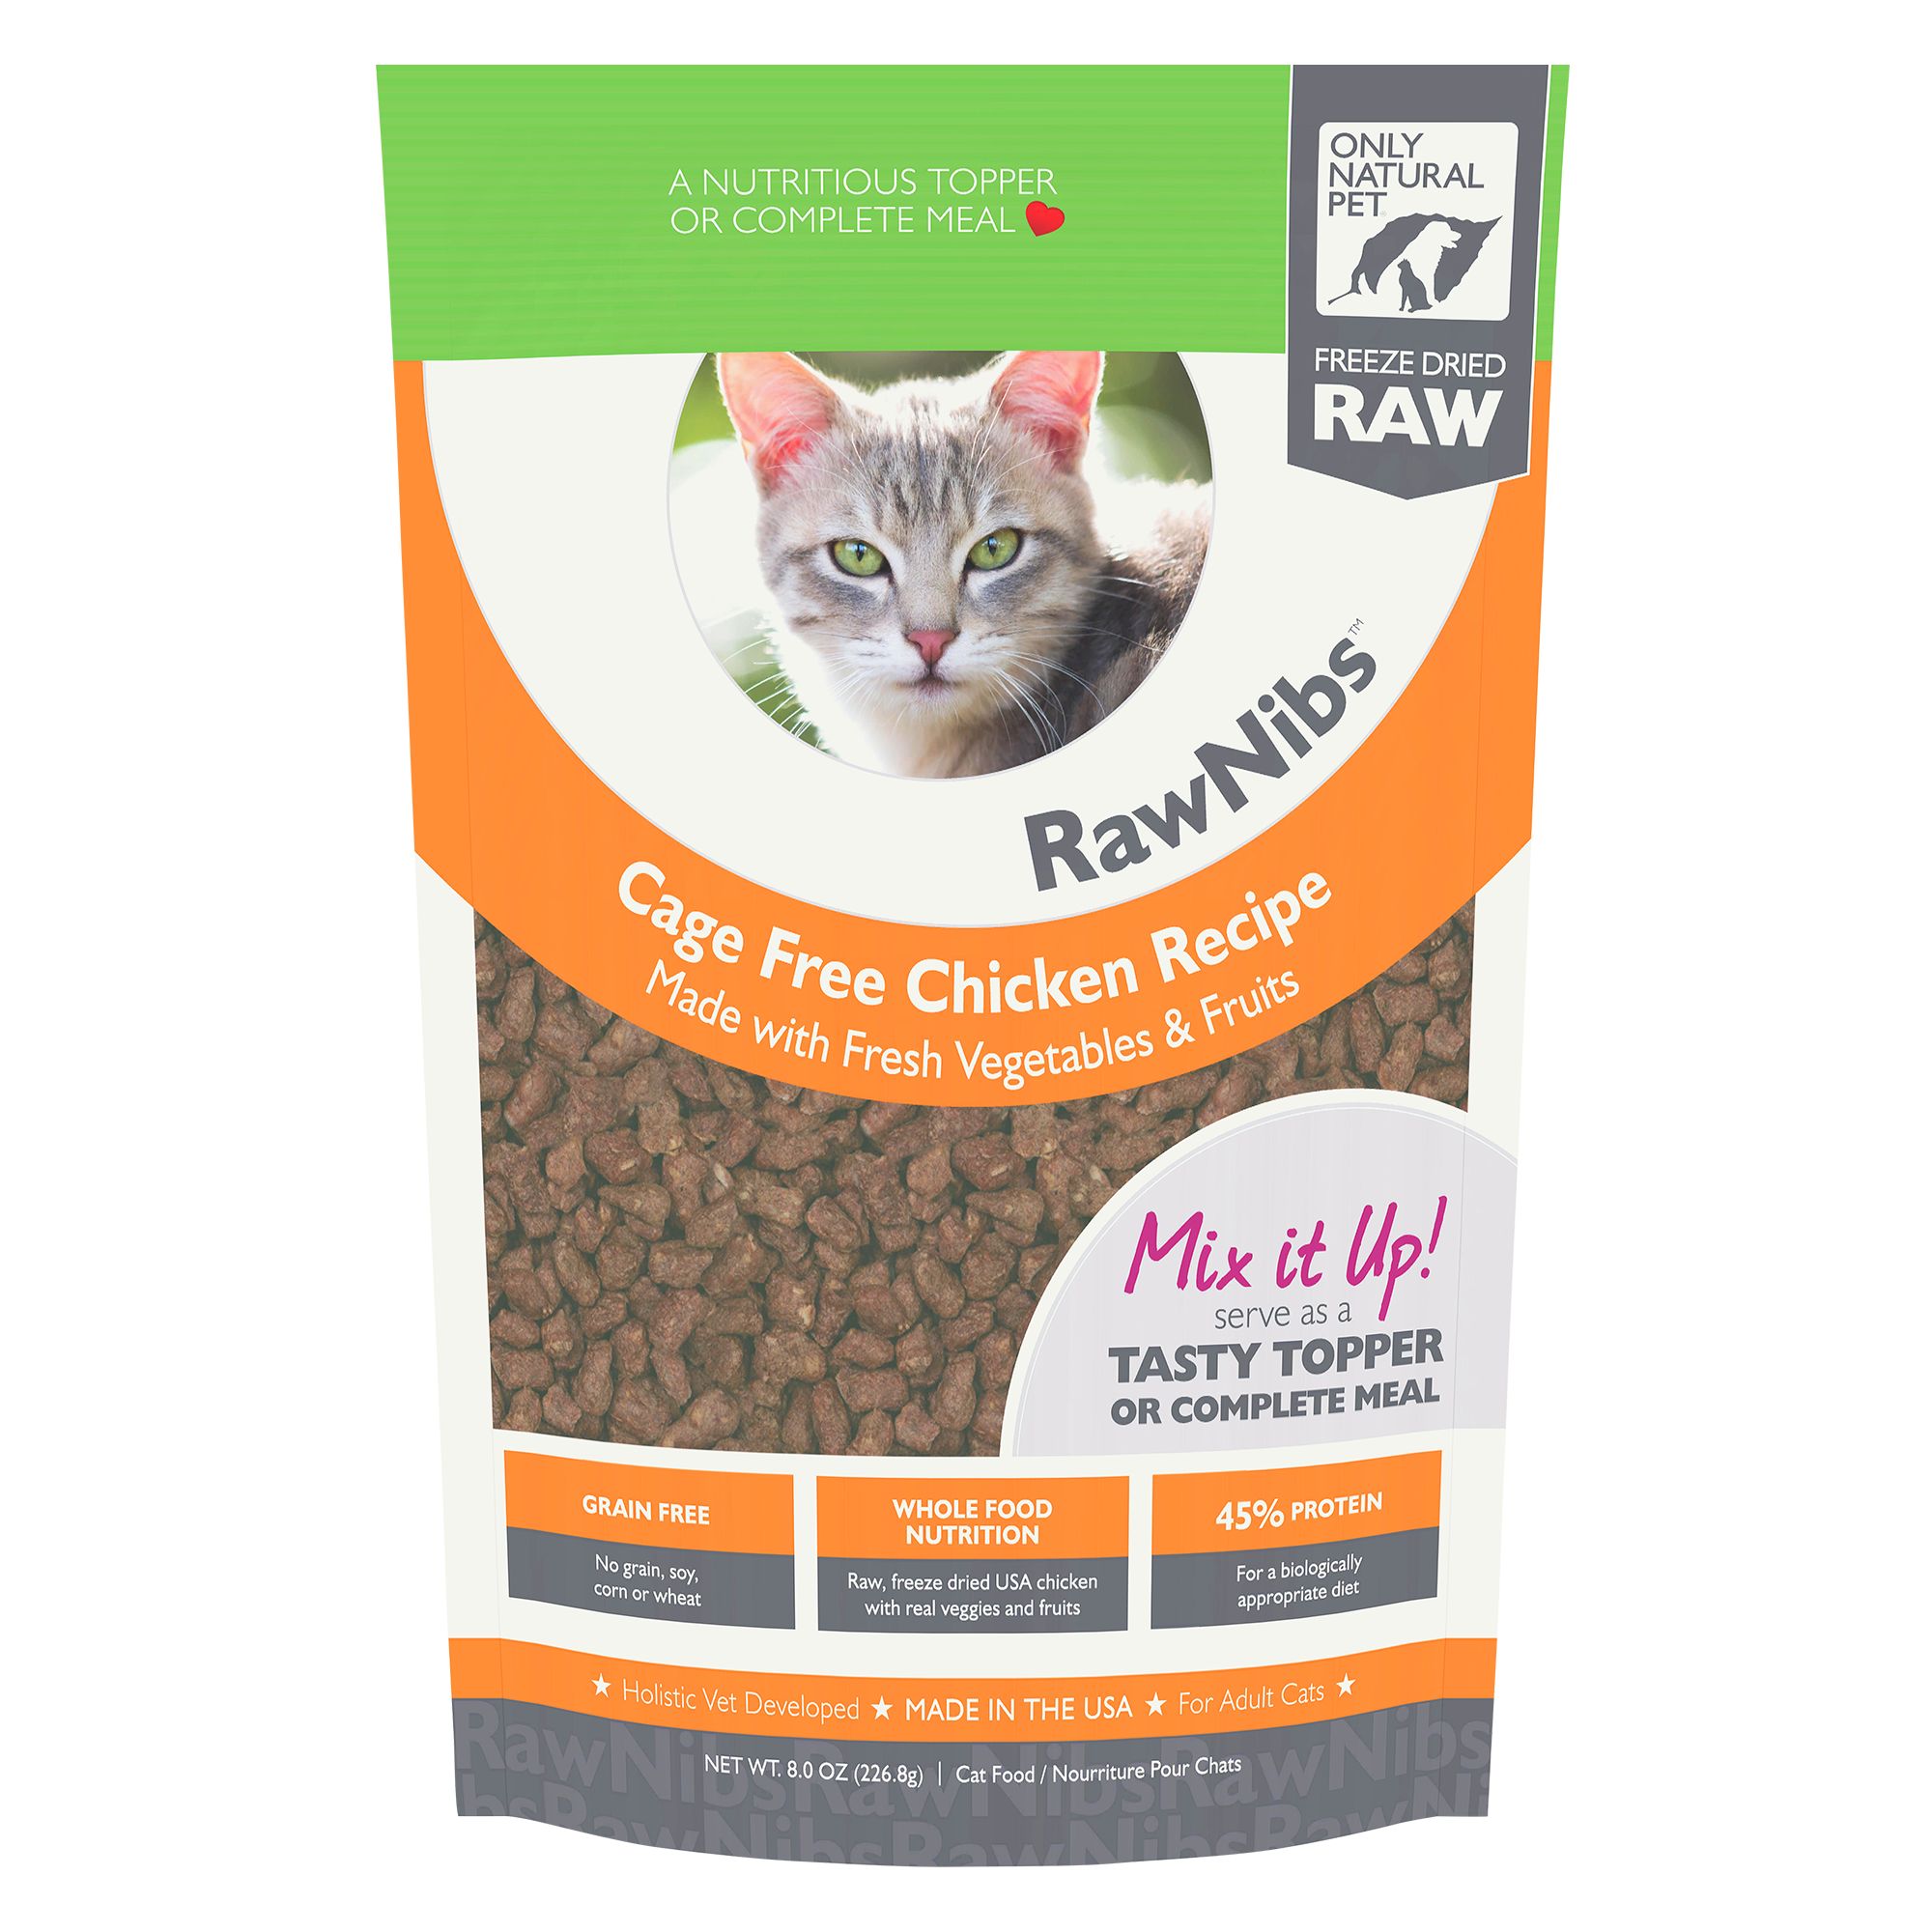 Only Natural Pet Rawnibs Cat Food Freeze Dried Raw Grain Free Chicken Cat Dry Food Petsmart